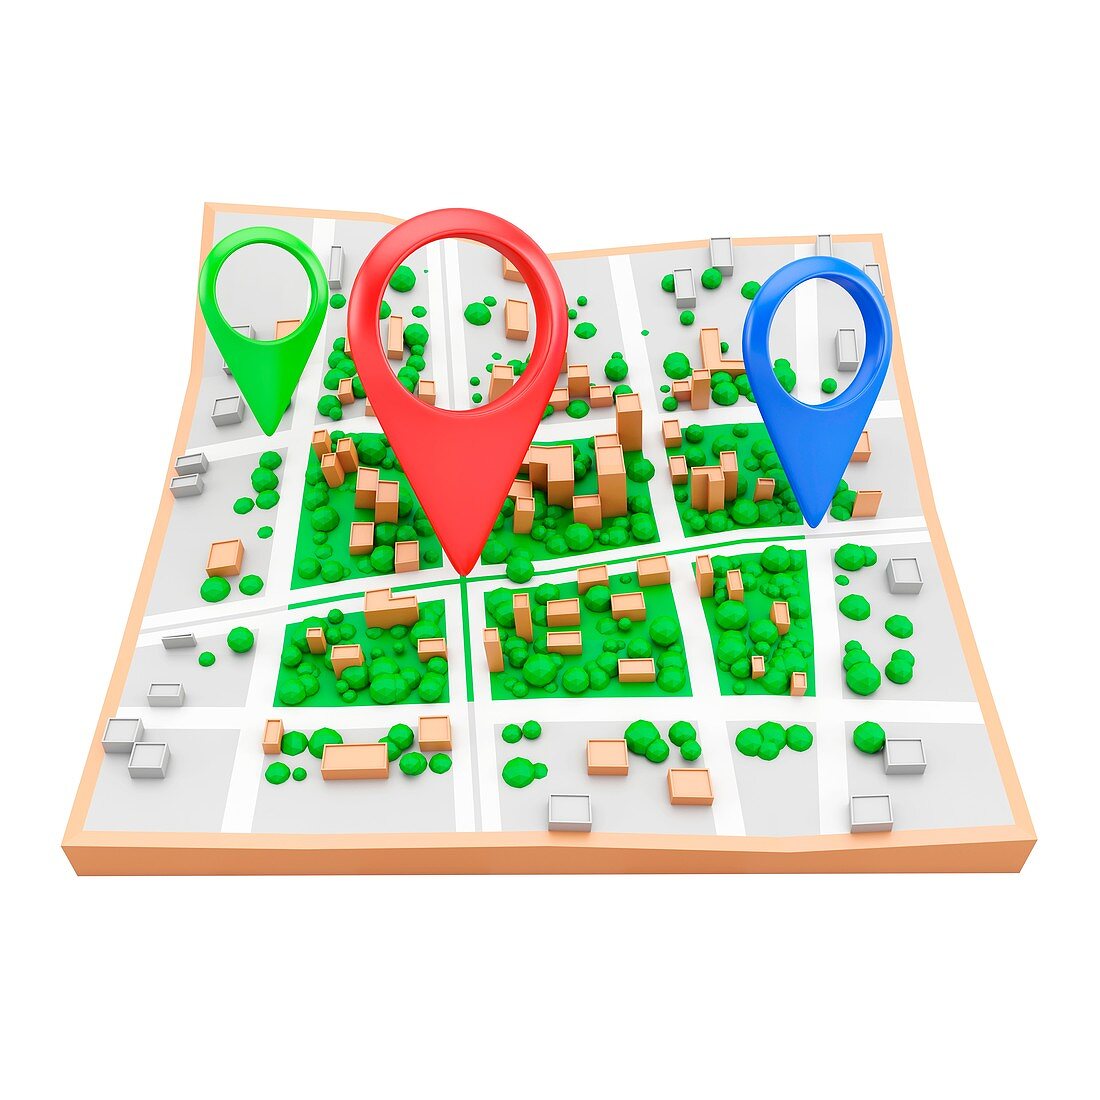 Location pins on city map, illustration